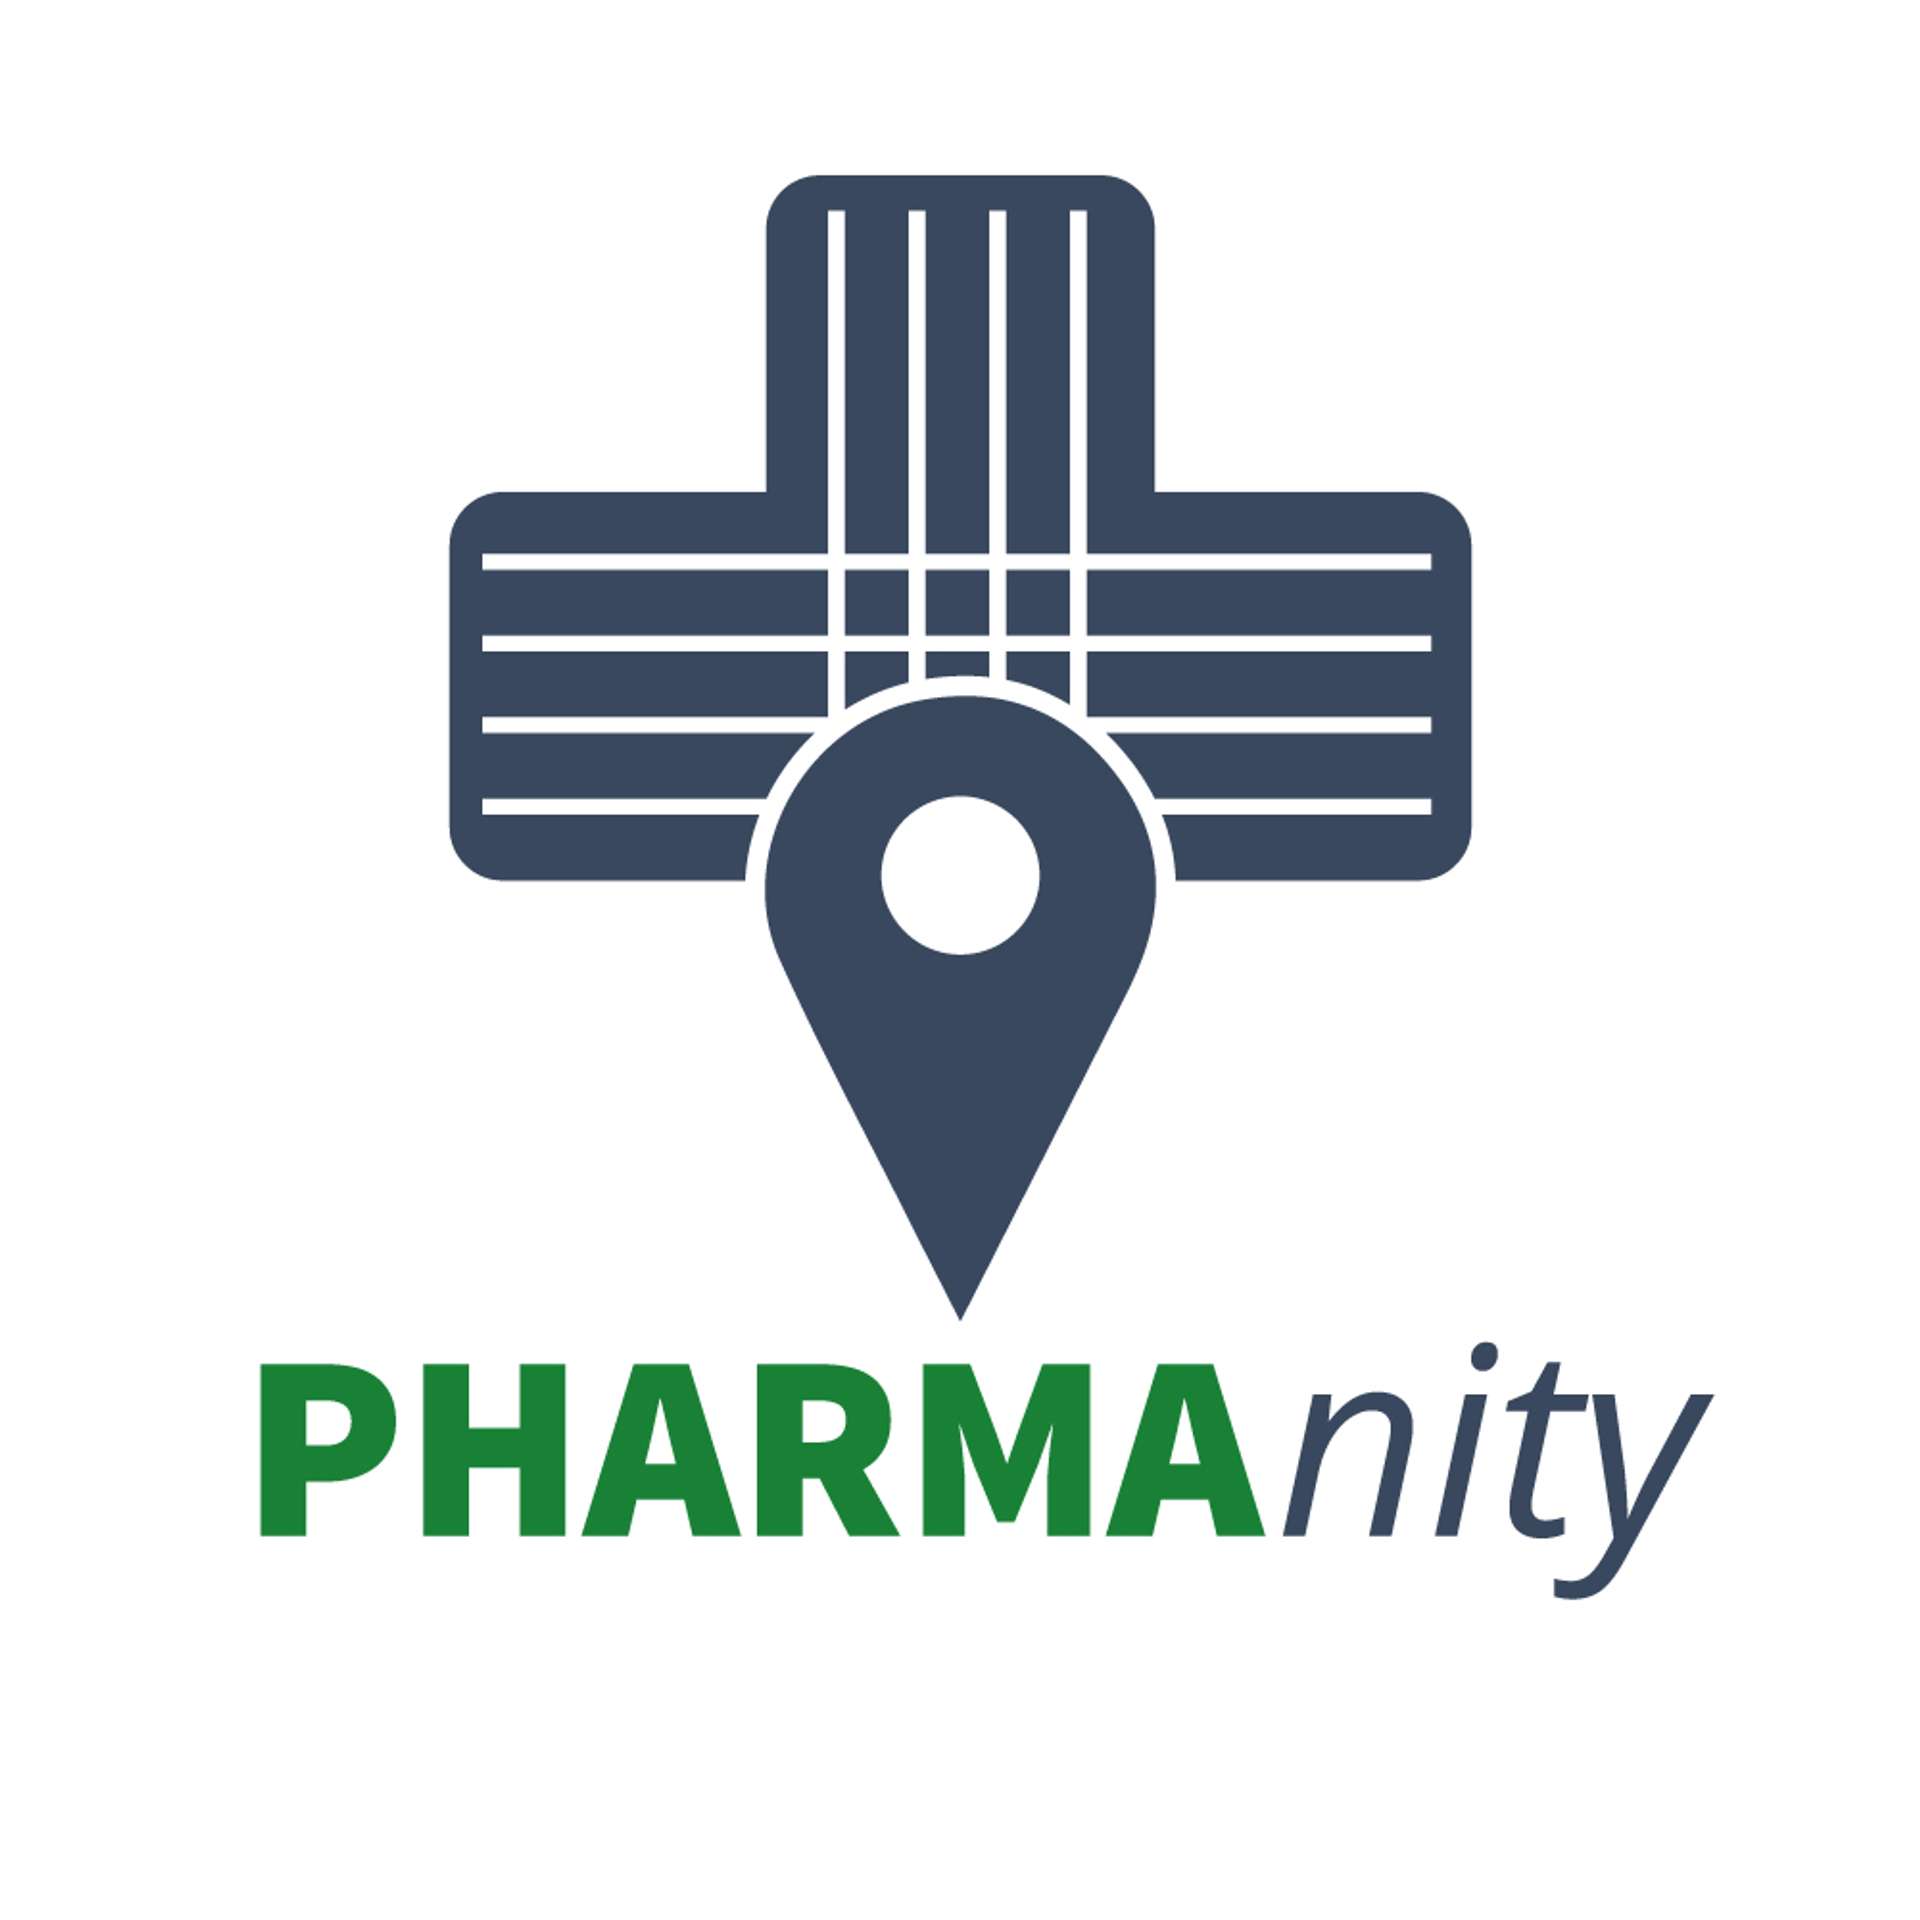 Pharmanity